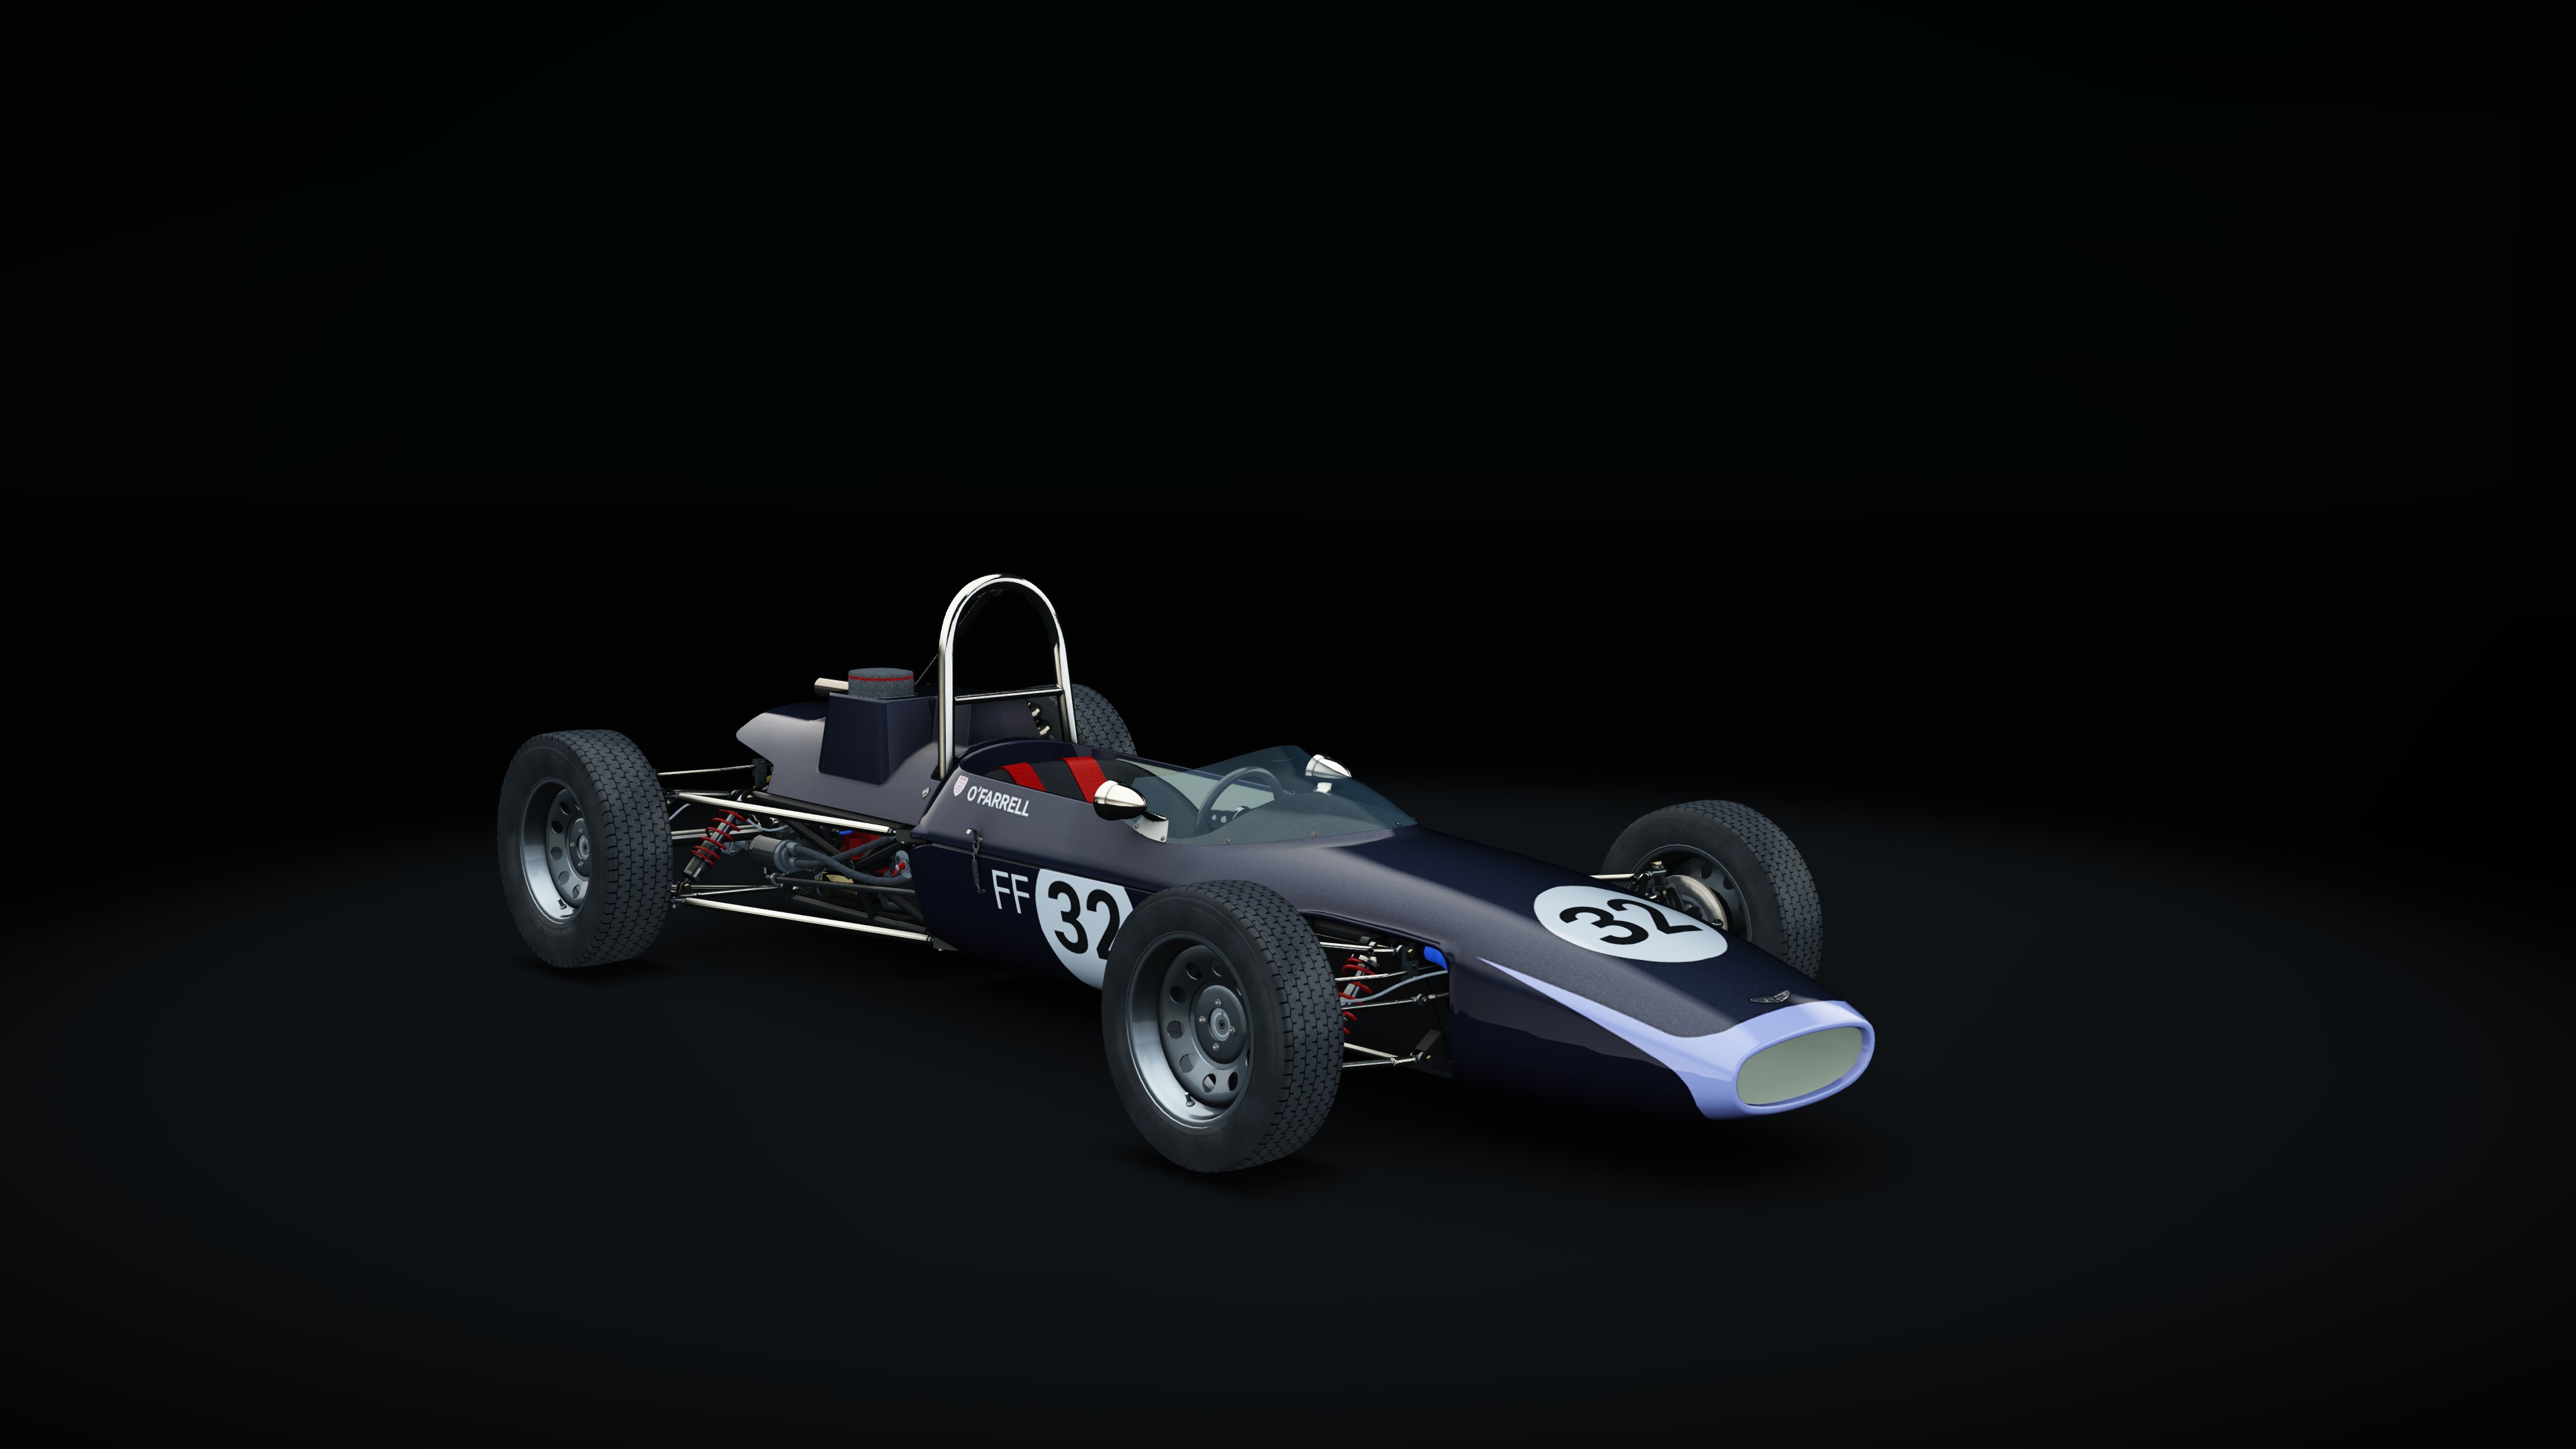 Russell-Alexis Mk. 14 Formula Ford, skin 32FOFarrell